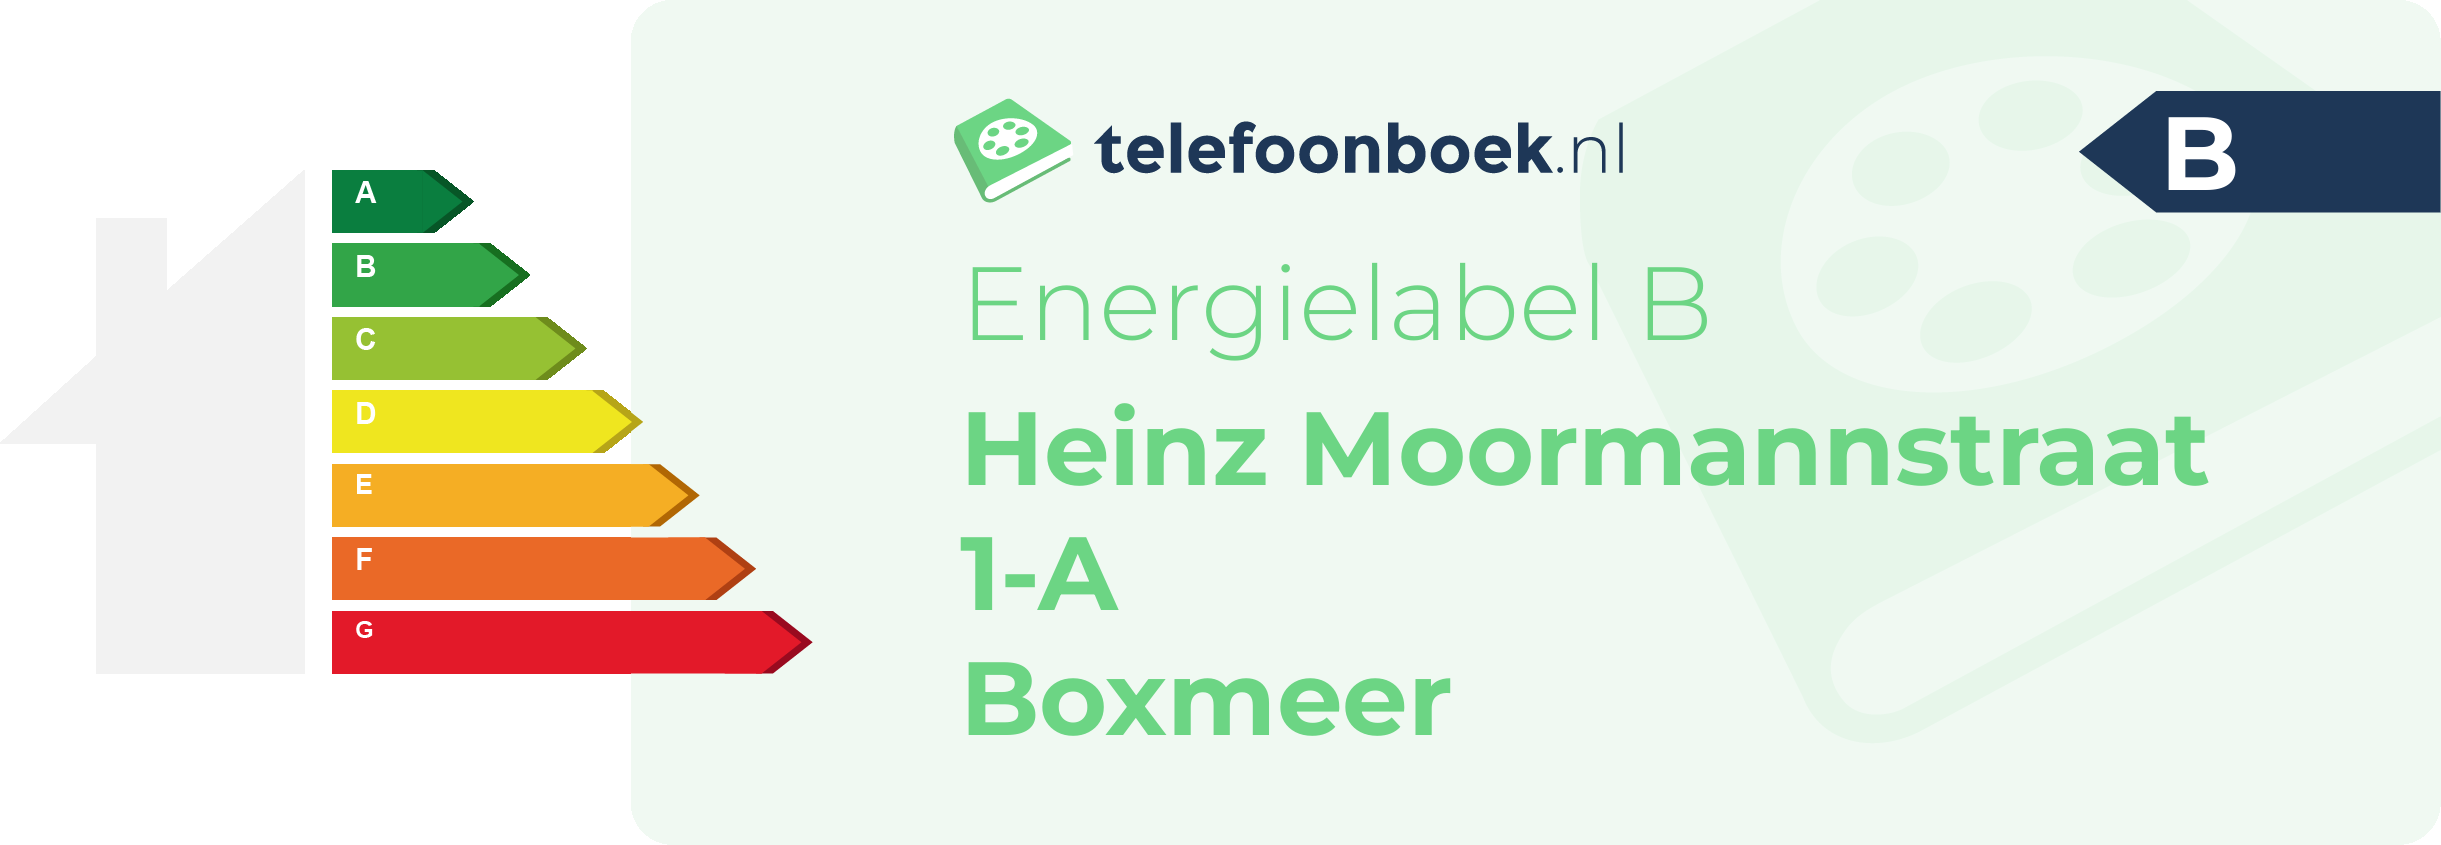 Energielabel Heinz Moormannstraat 1-A Boxmeer